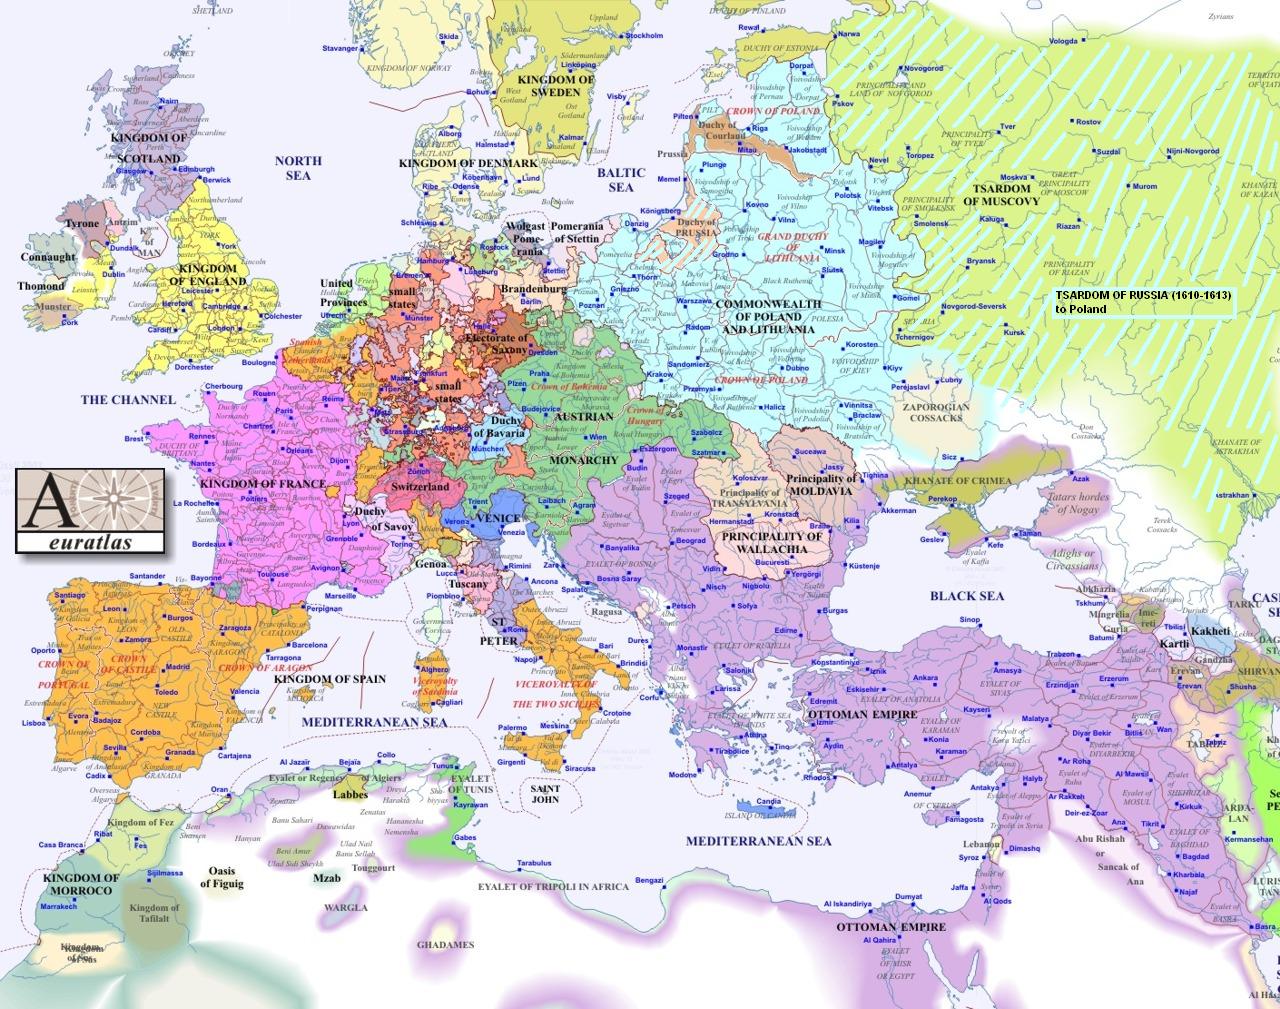 Europe_map_1600.jpg